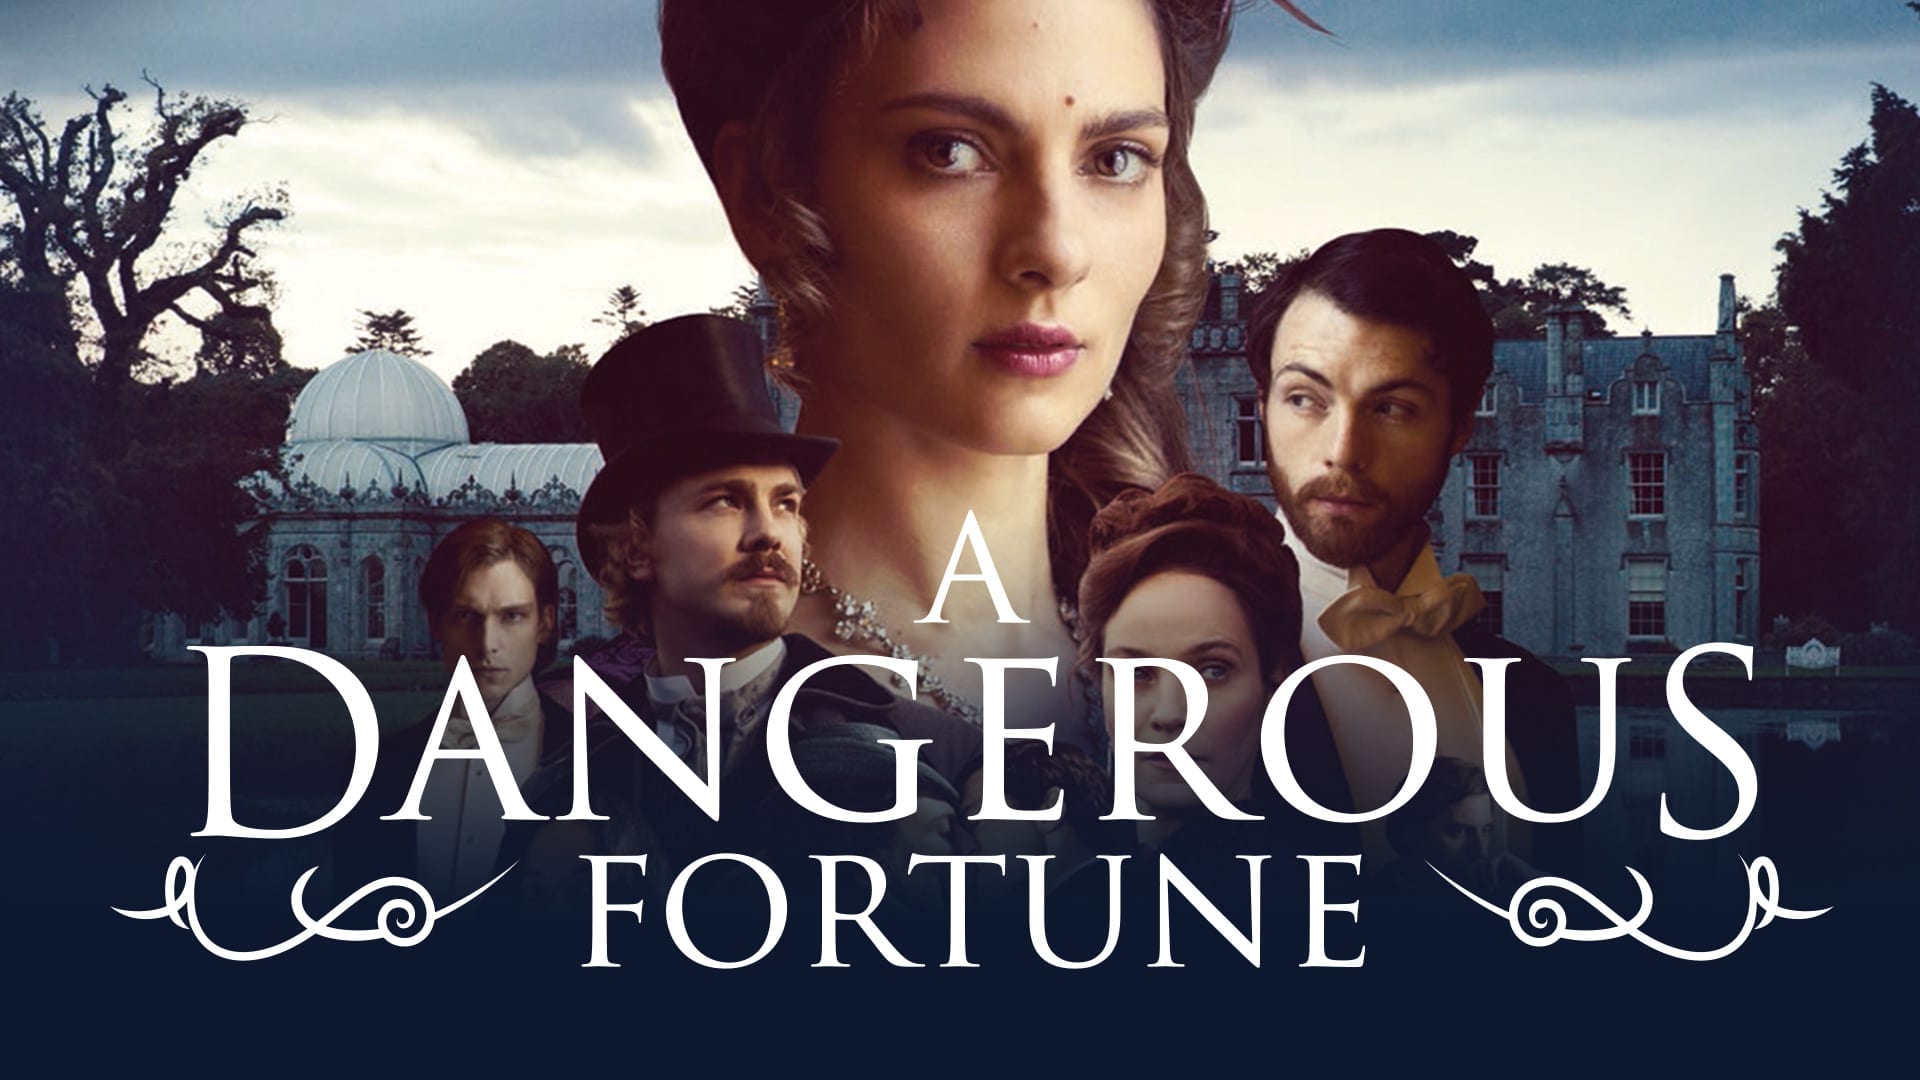 a dangerous fortune vimeo ott series banner 1920x1080 1